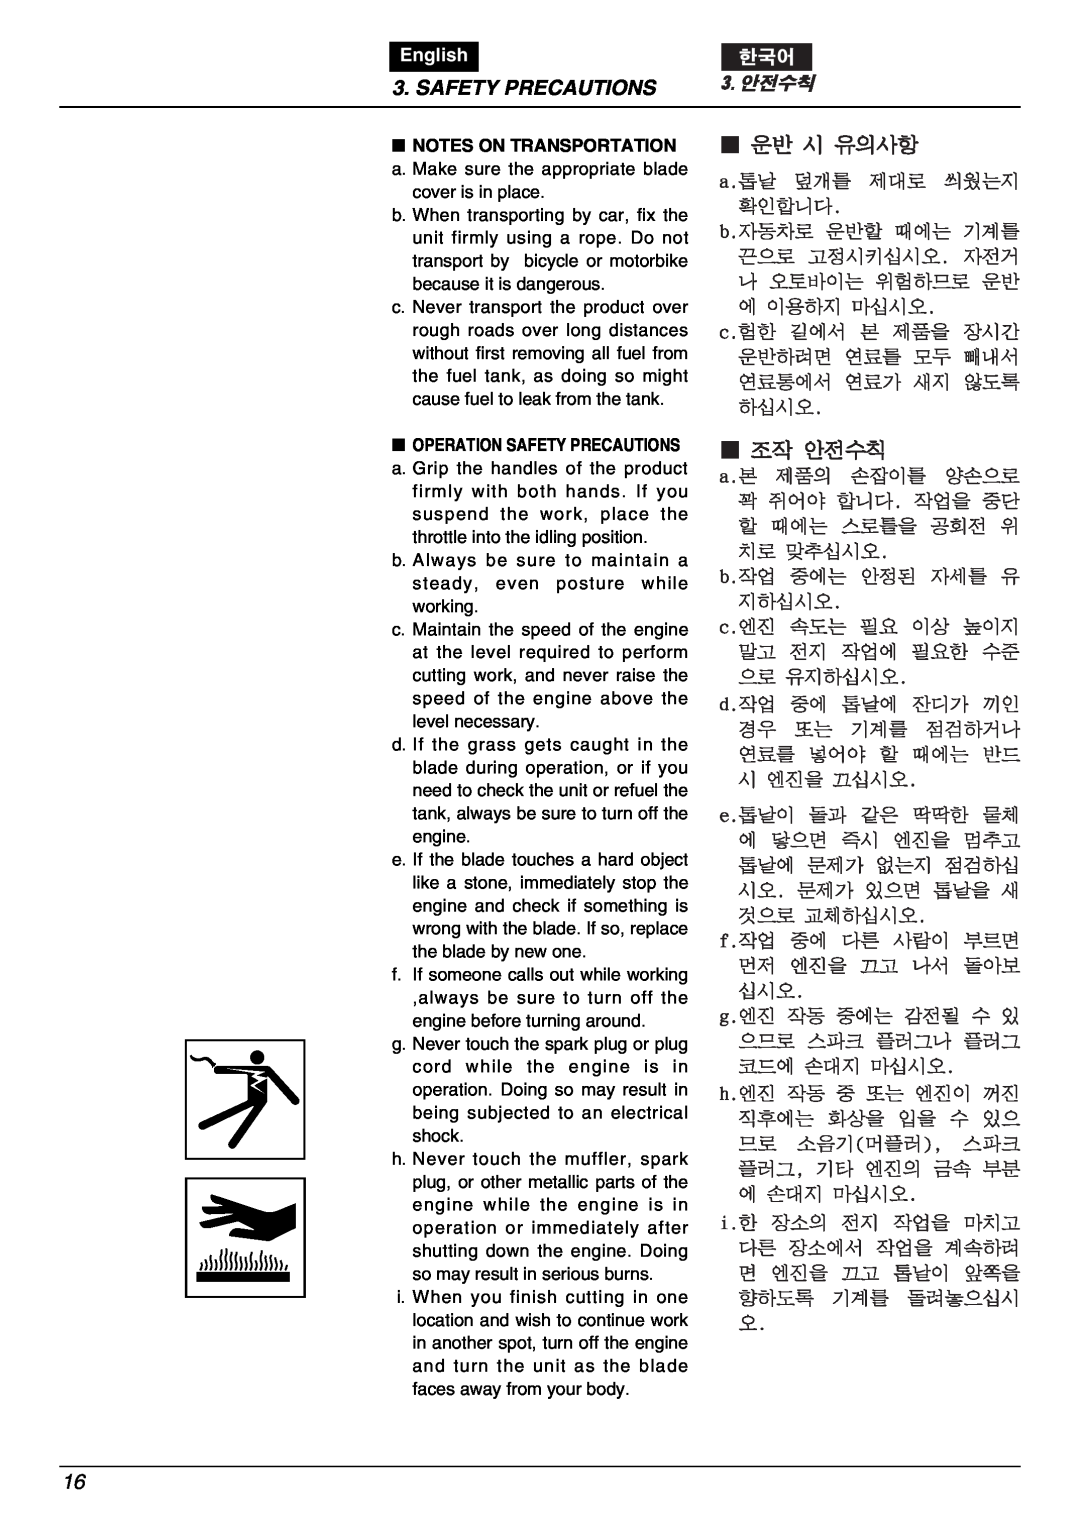 Zenoah BK2650DL-Hb owner manual English, Notes On Transportation, Operation Safety Precautions 